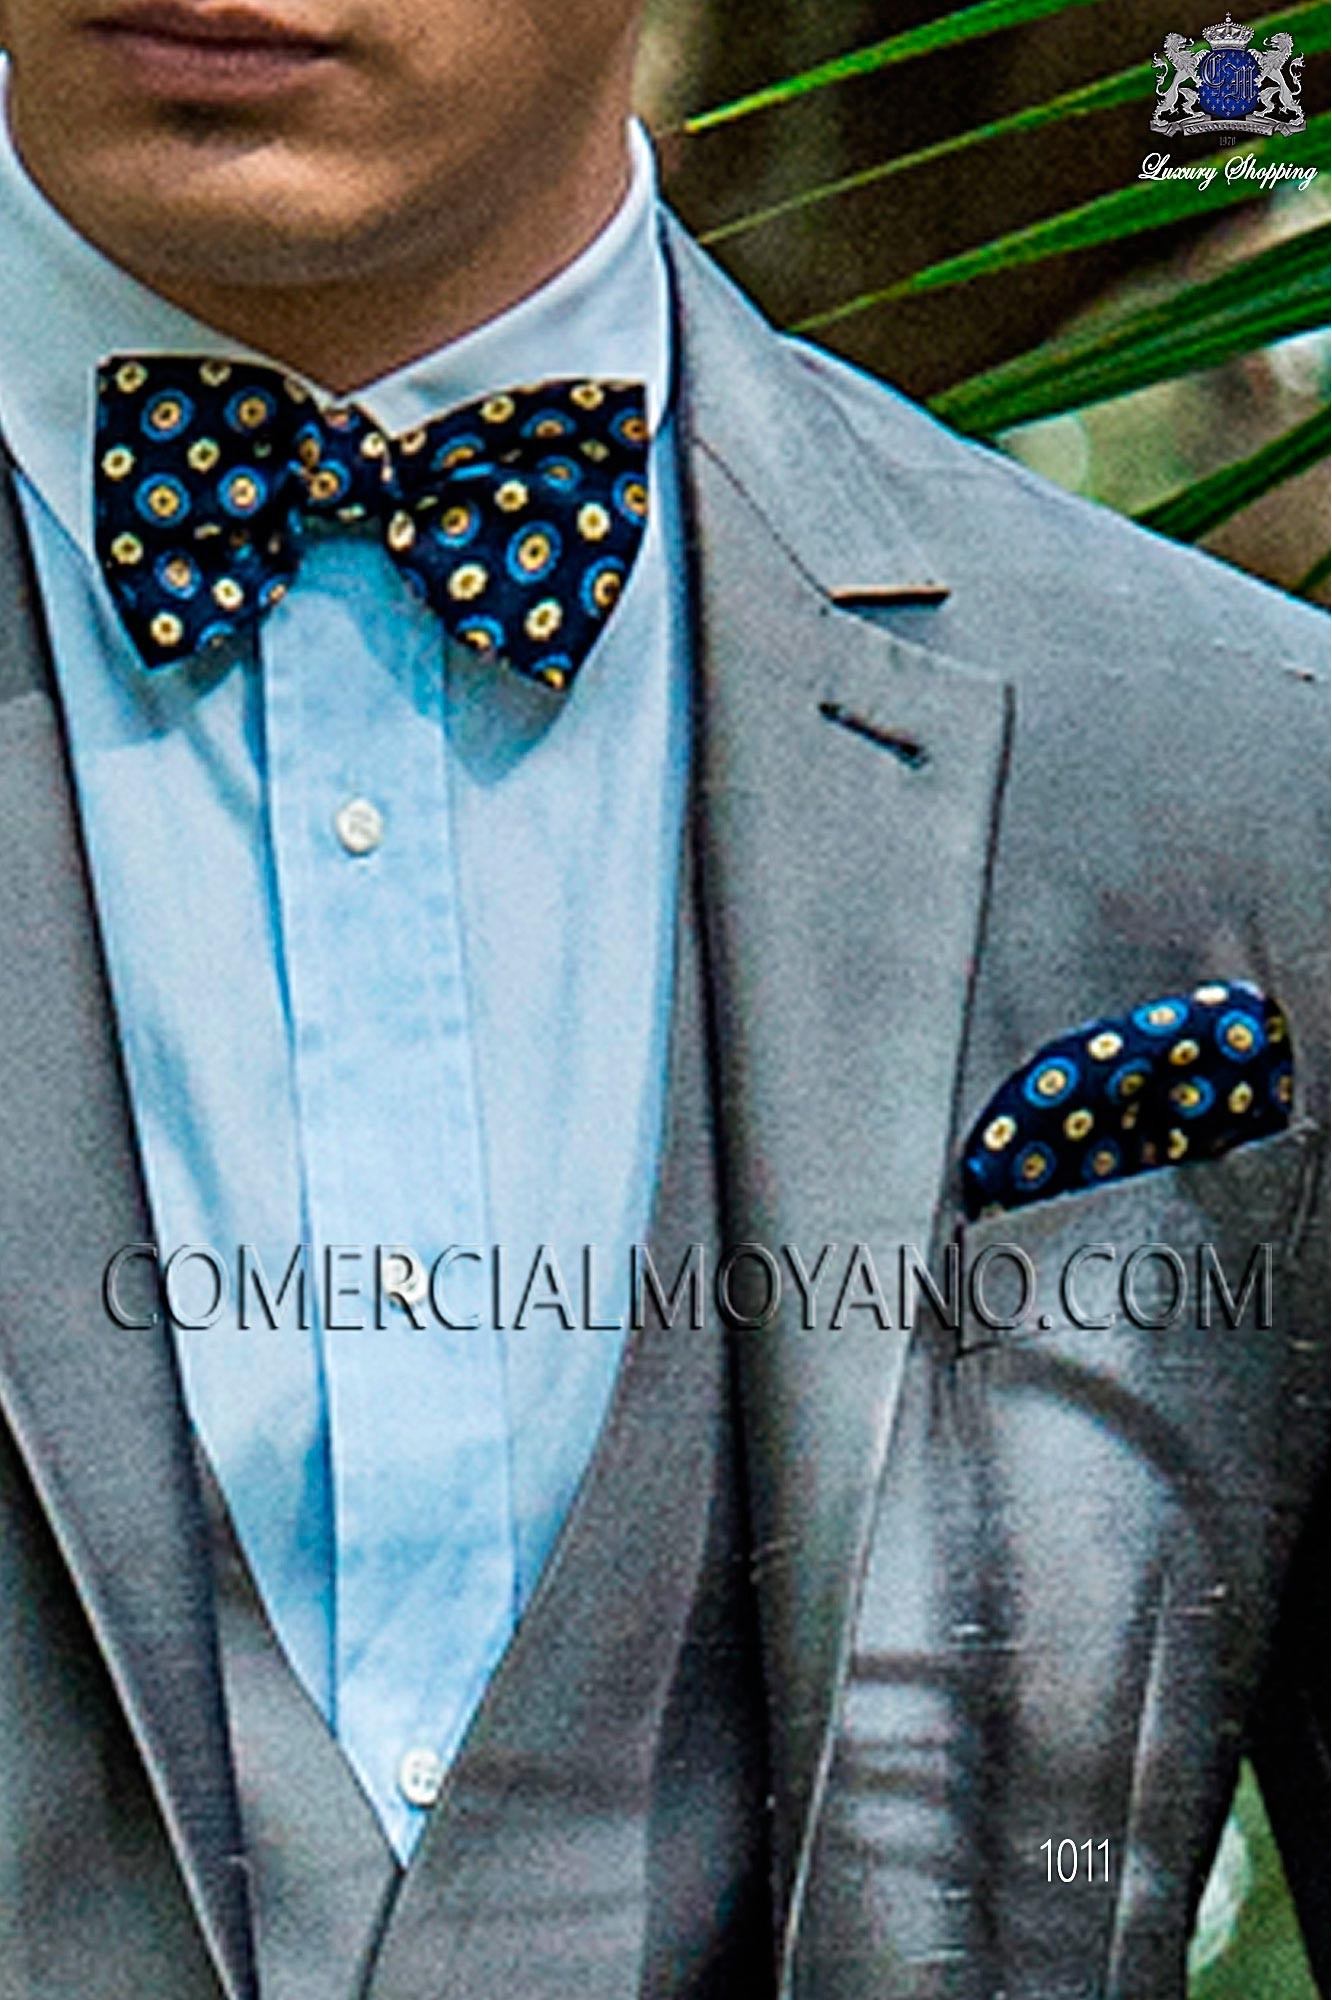 Hipster silver men wedding suit, model: 1011 Mario Moyano Hipster Collection